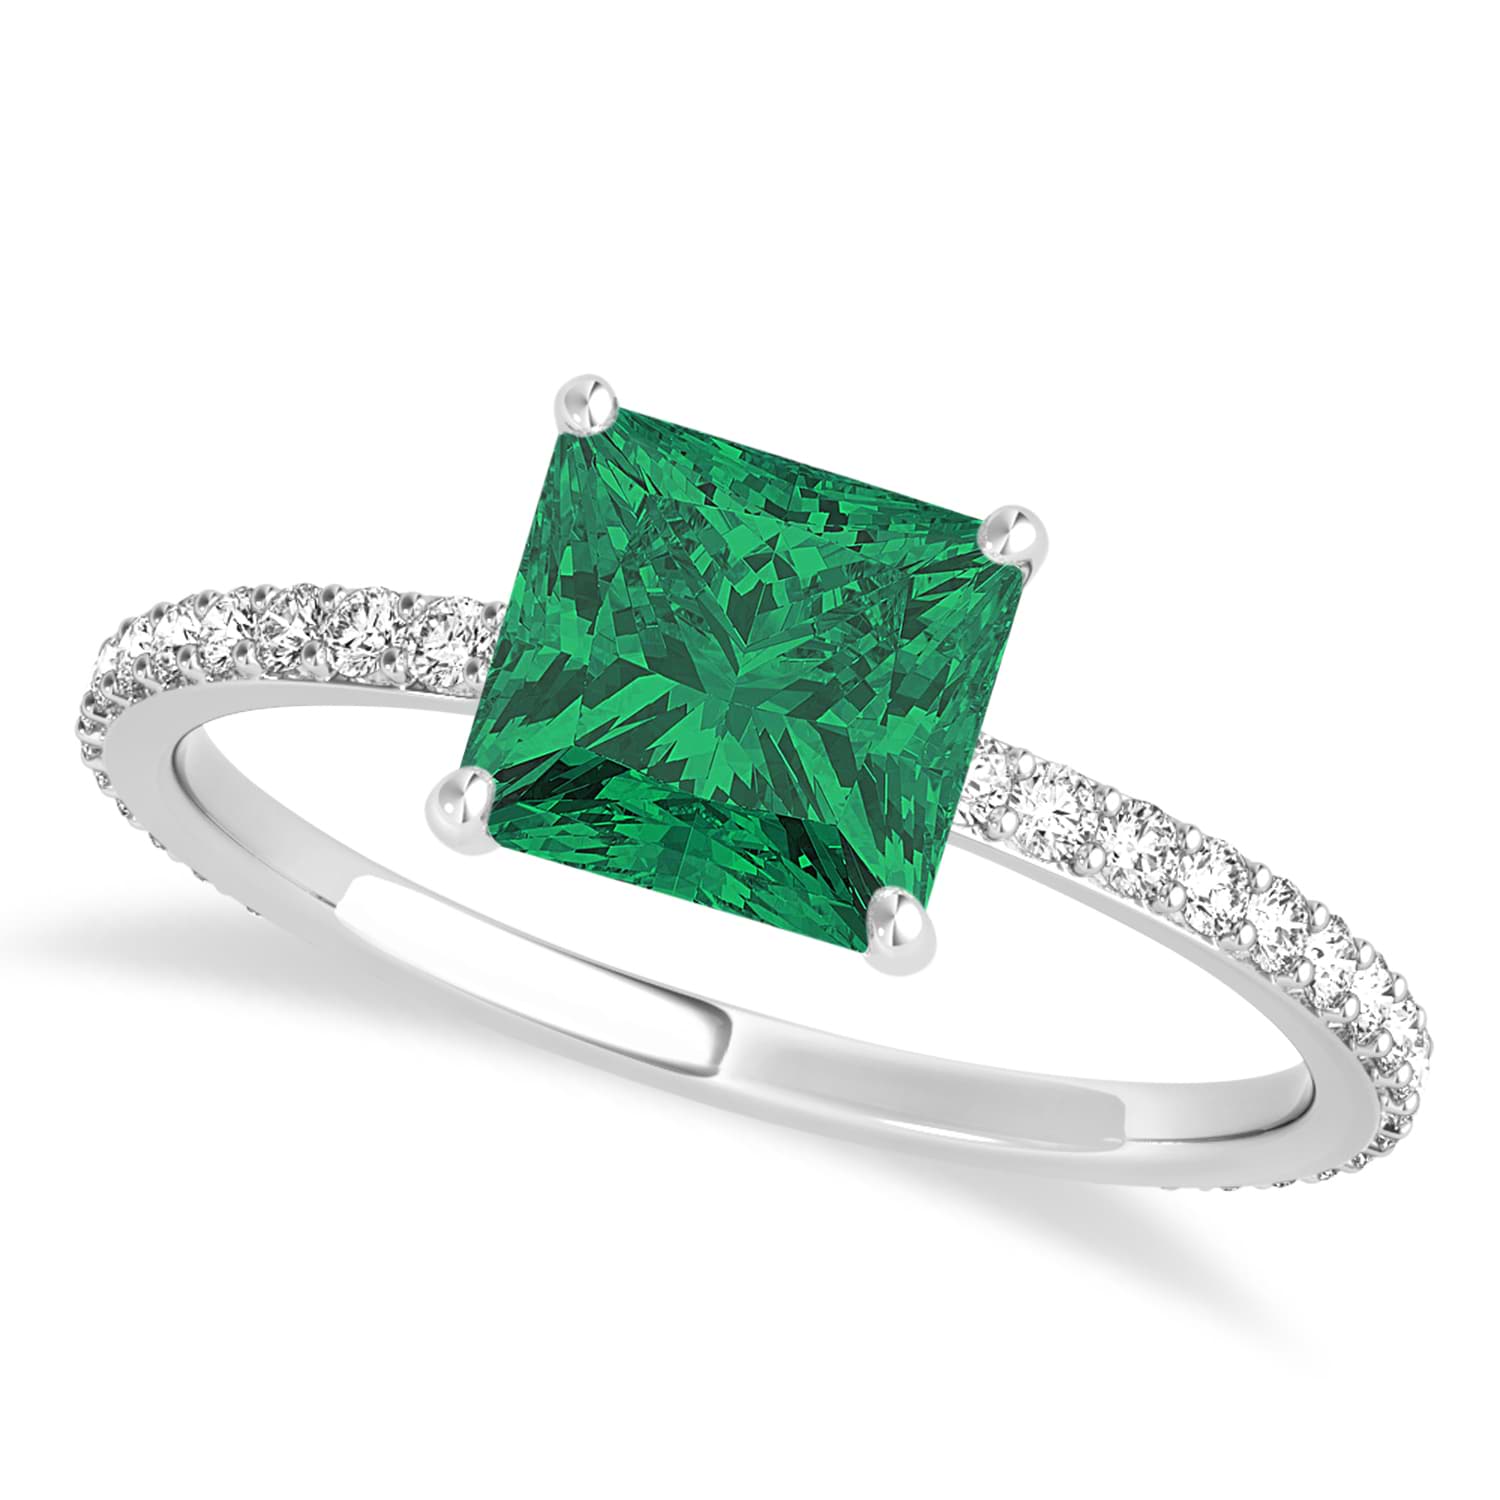 Princess Emerald & Diamond Hidden Halo Engagement Ring 14k White Gold (0.89ct)